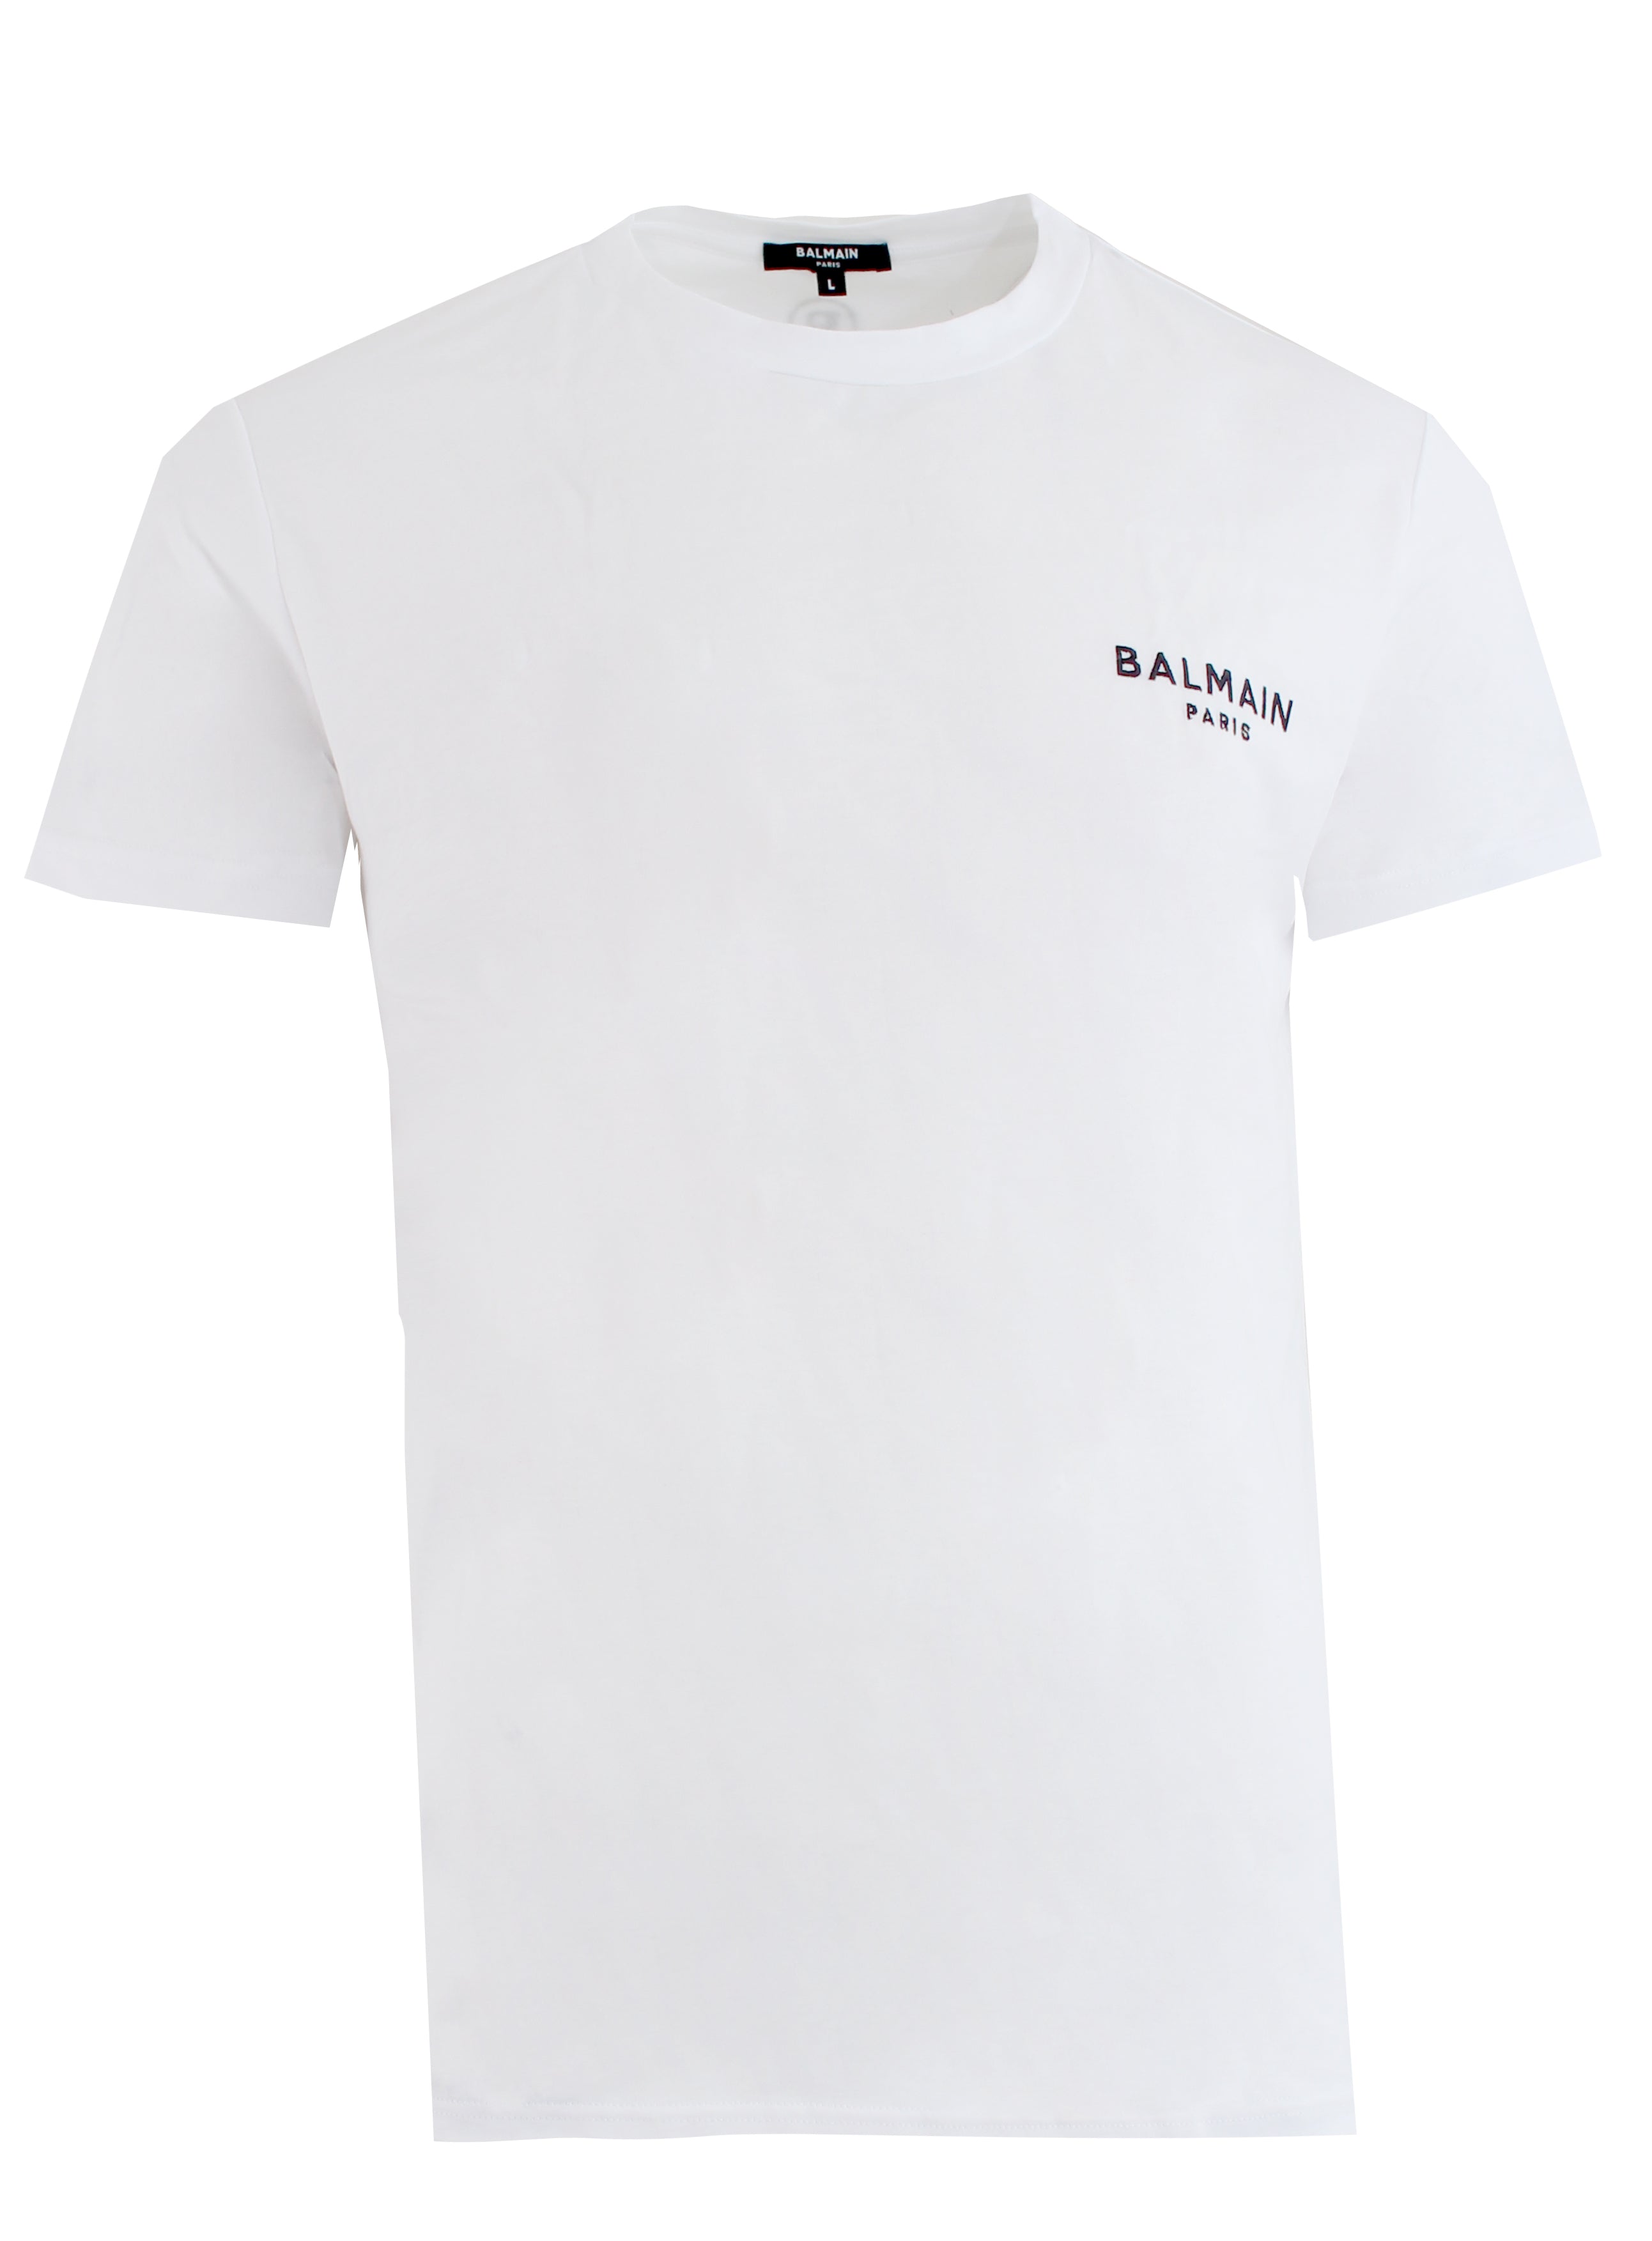 Frastødende krystal nuance Men's Balmain Paris Logo Tee Shirt - PureAtlanta.com